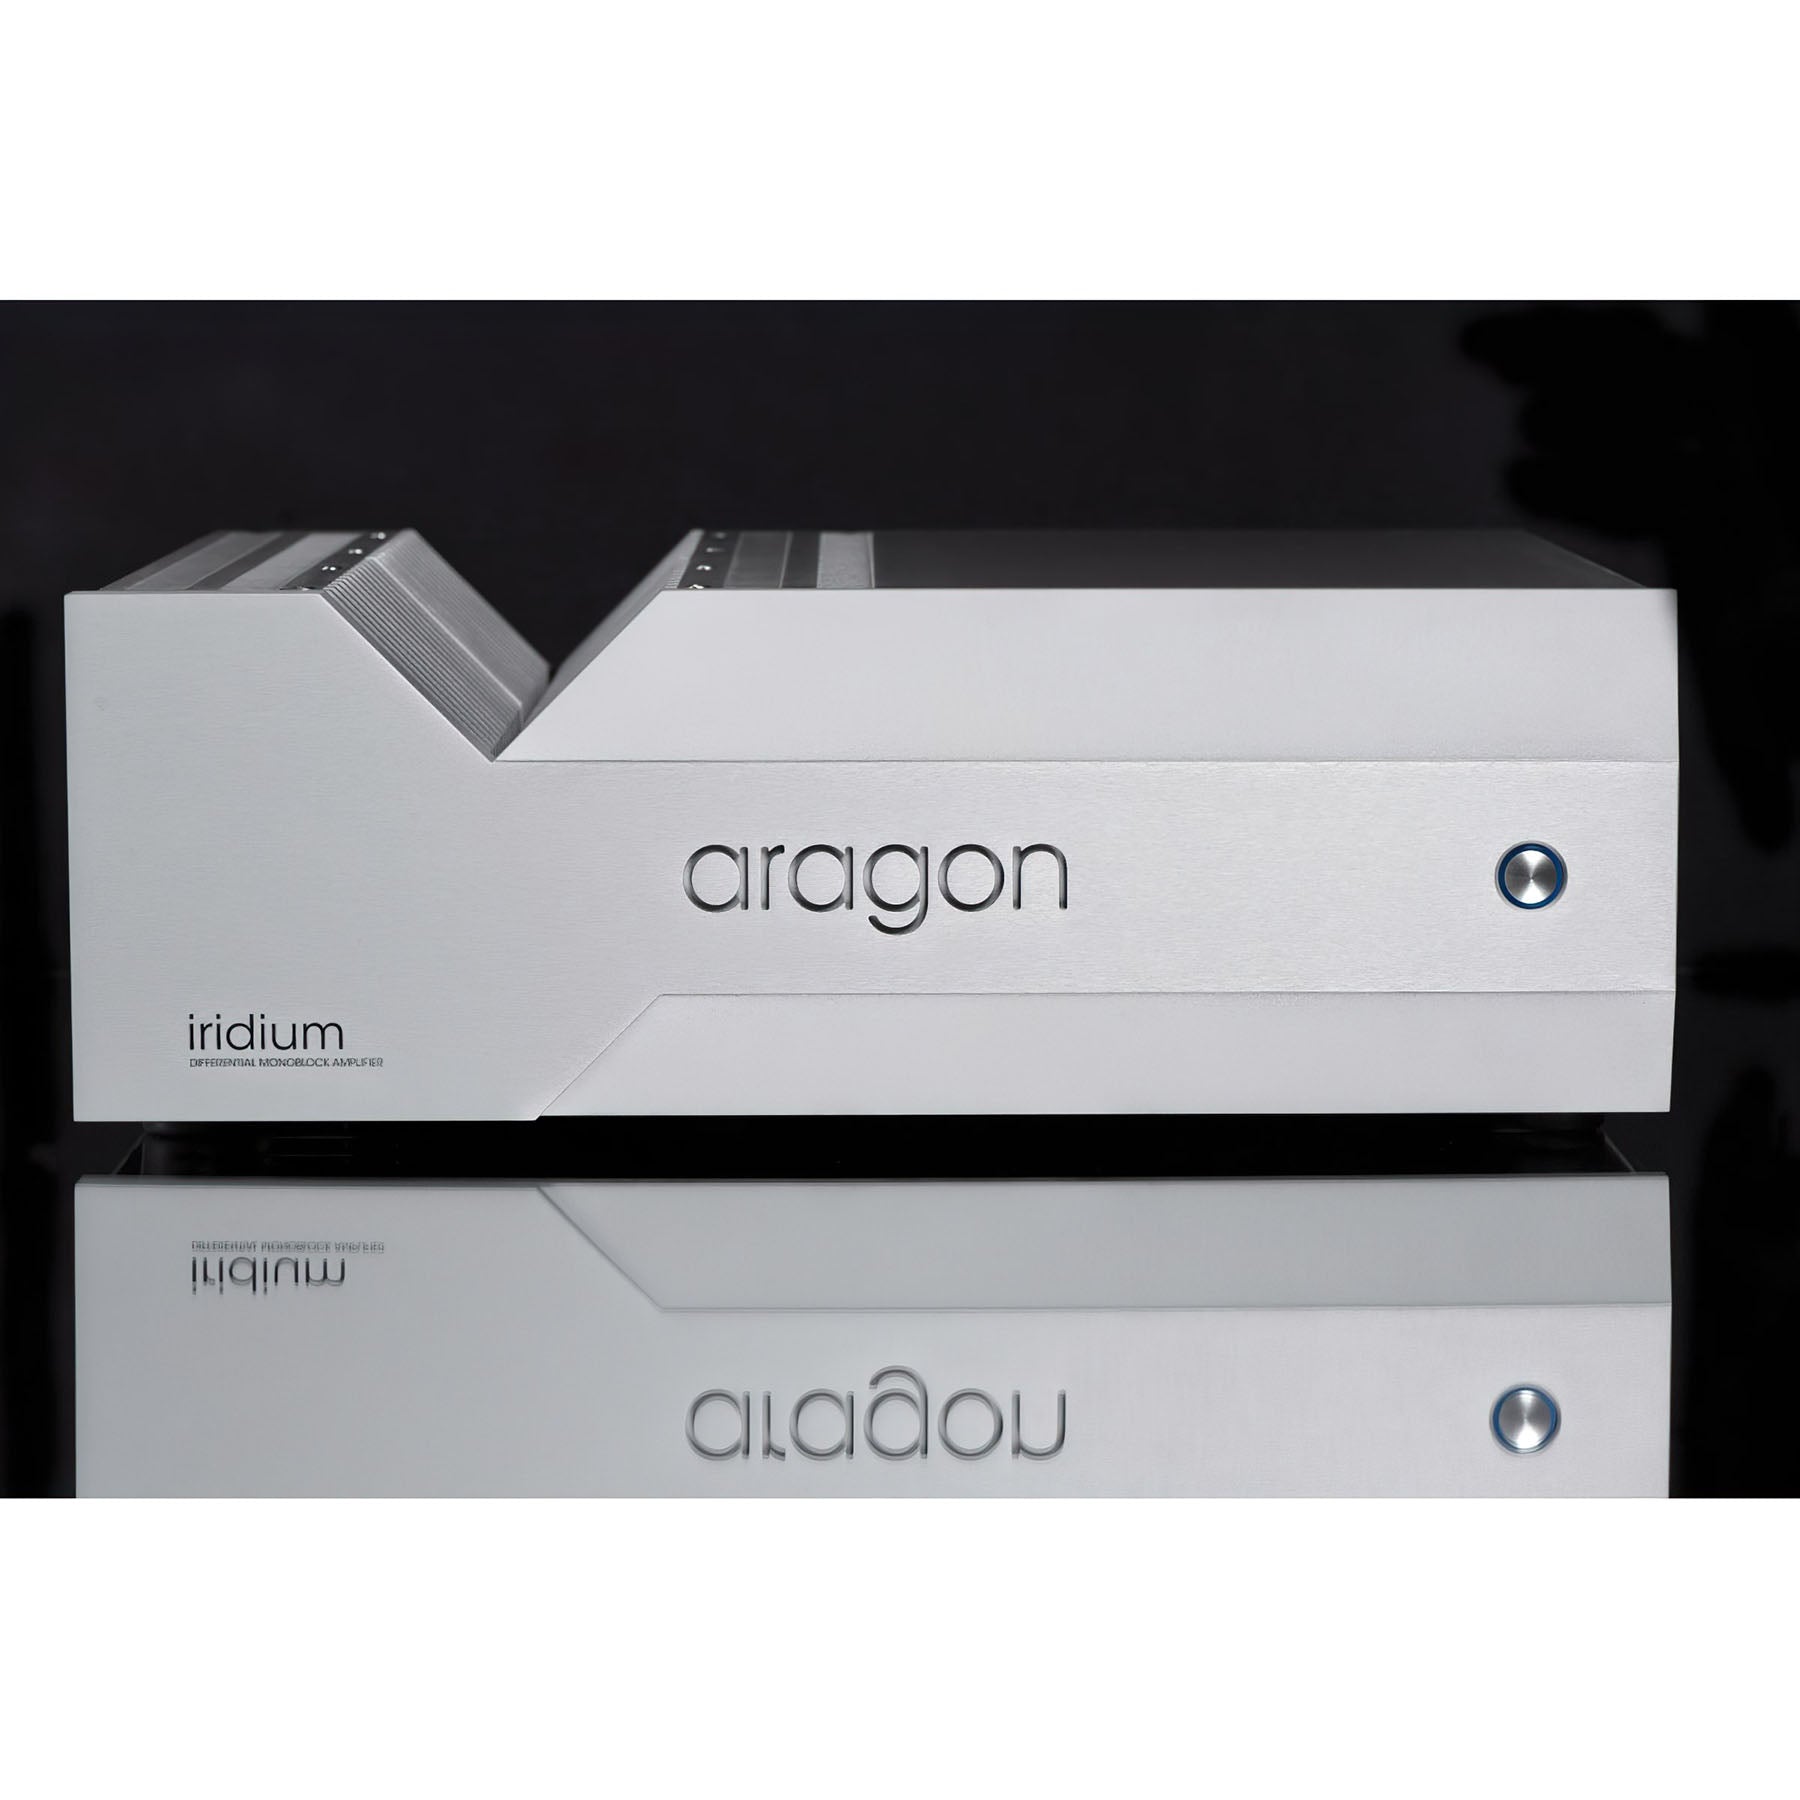 Aragon Iridium 400W Monoblock Amplifier